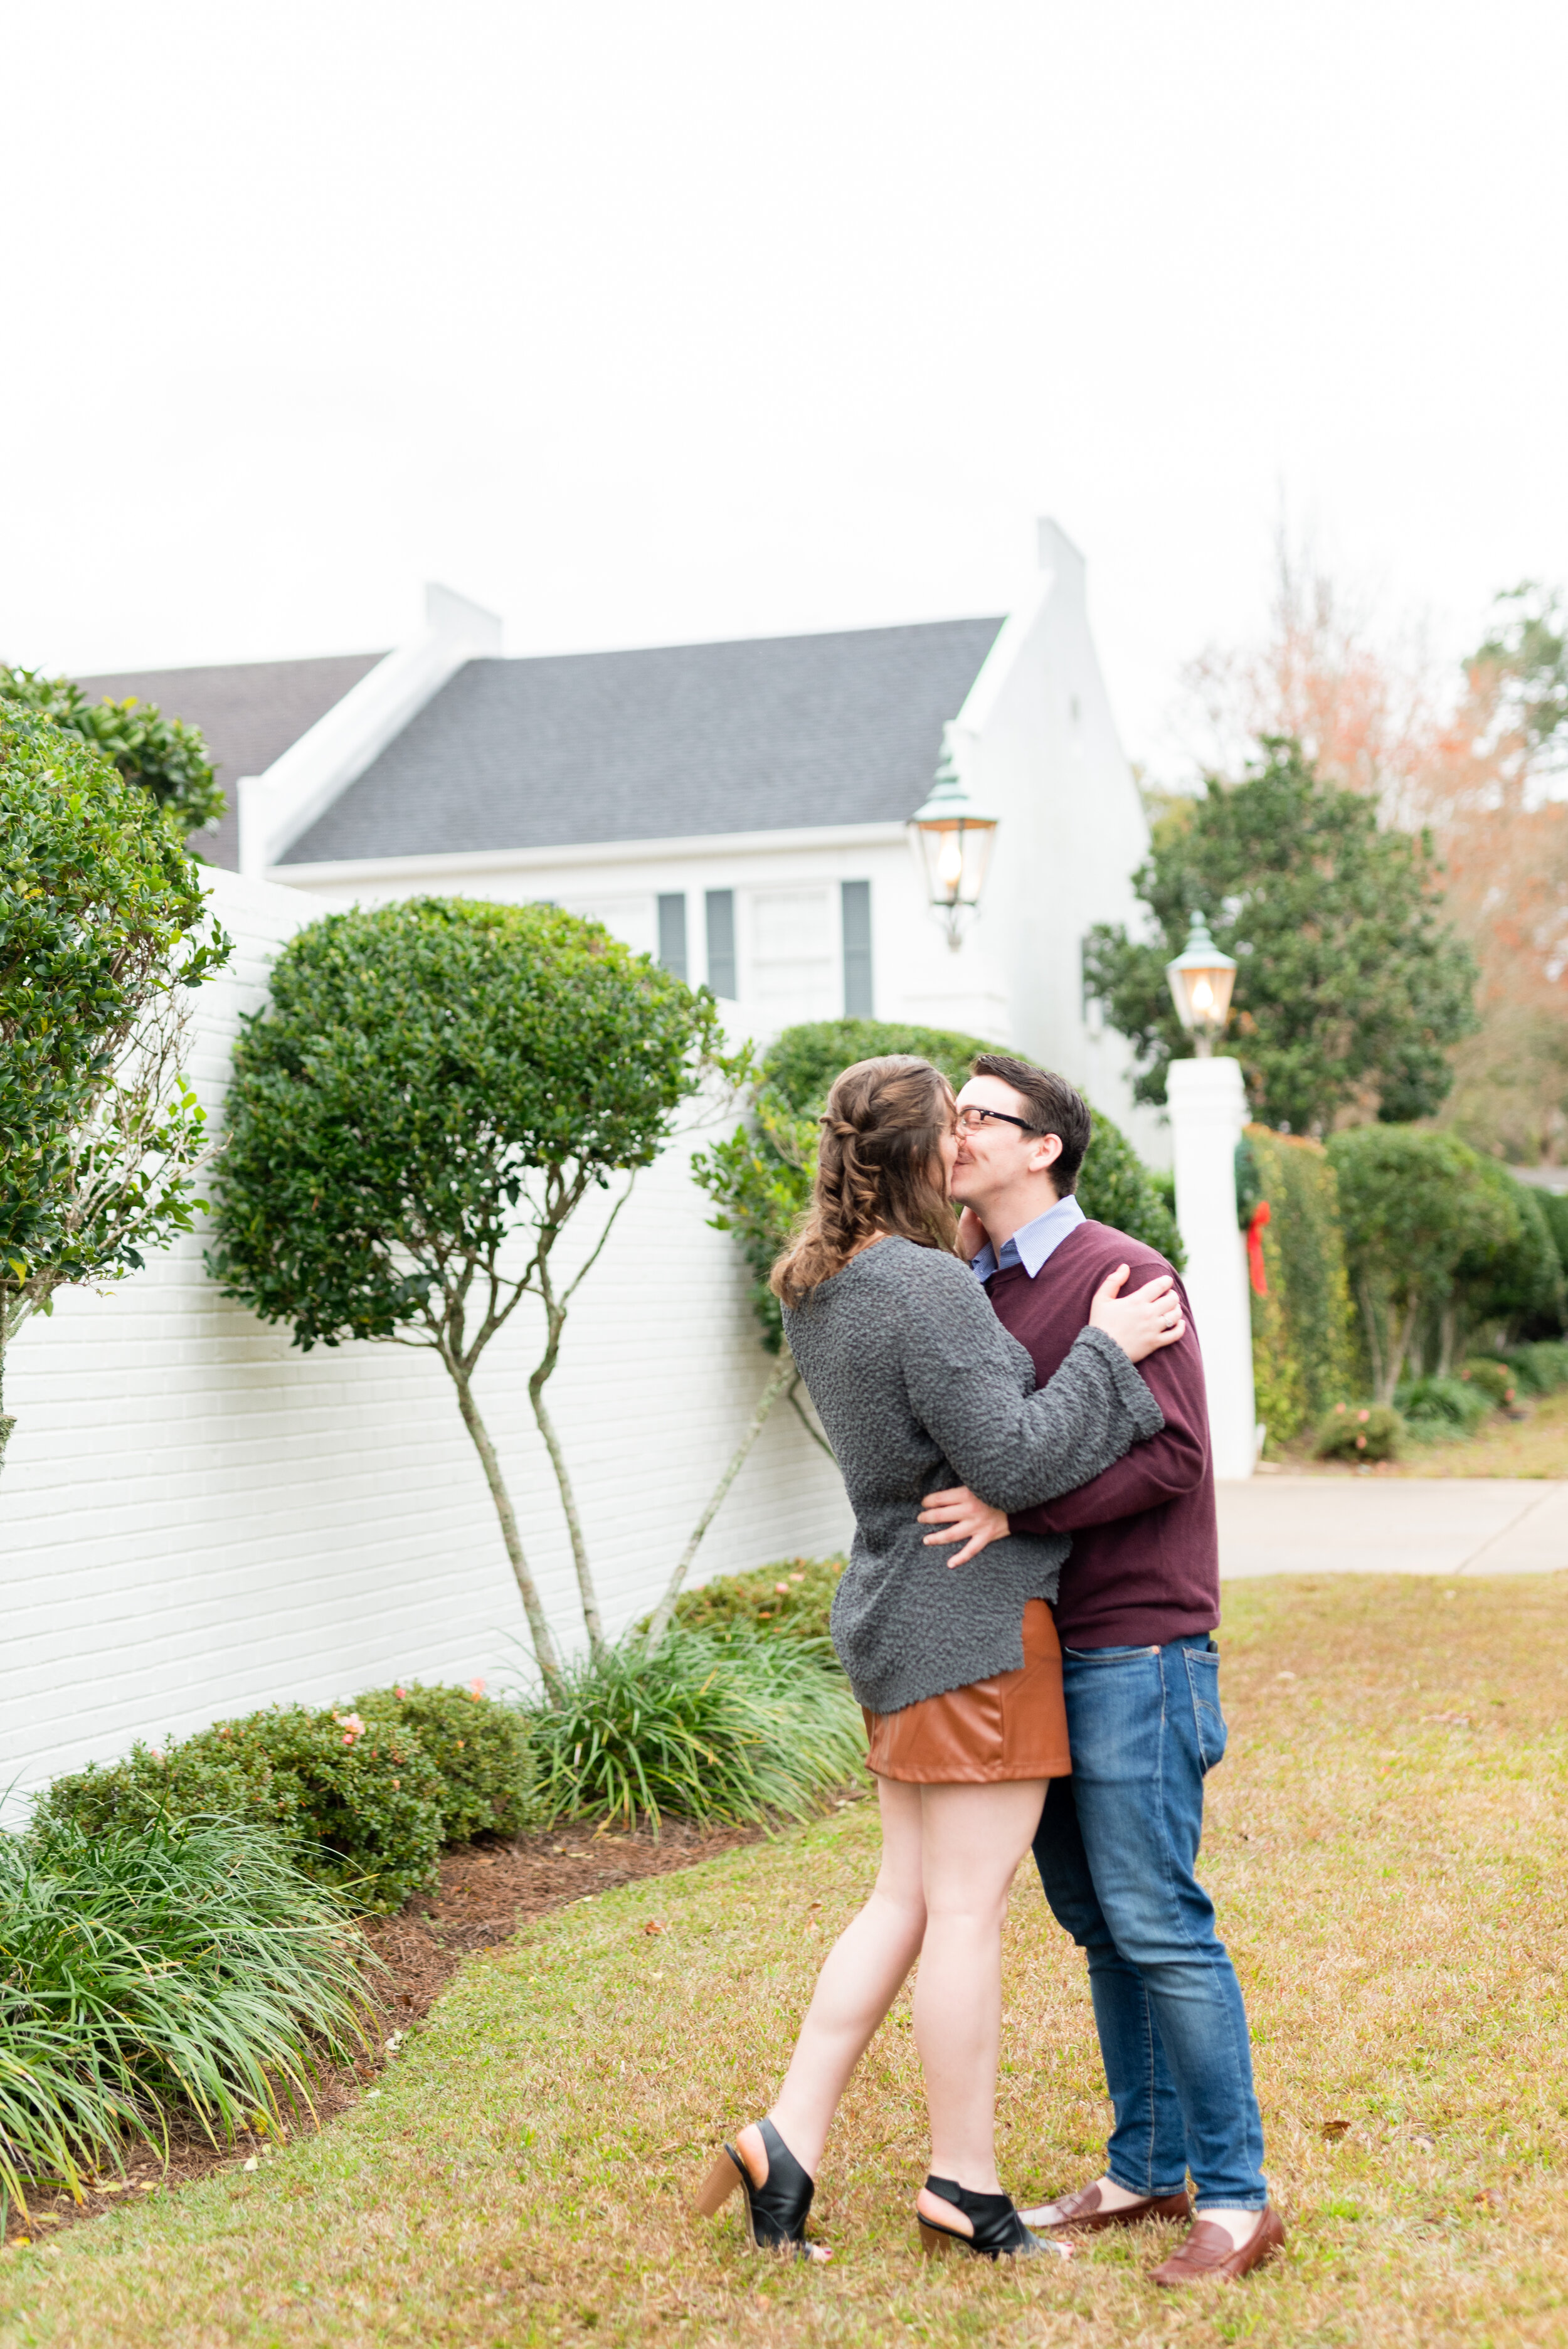 Carpe Diem Engagement Photoshoot | Spring Hill College Engagement Photoshoot | Rainy Day Engagement Photoshoot | Photography by Kristen Marcus Photography